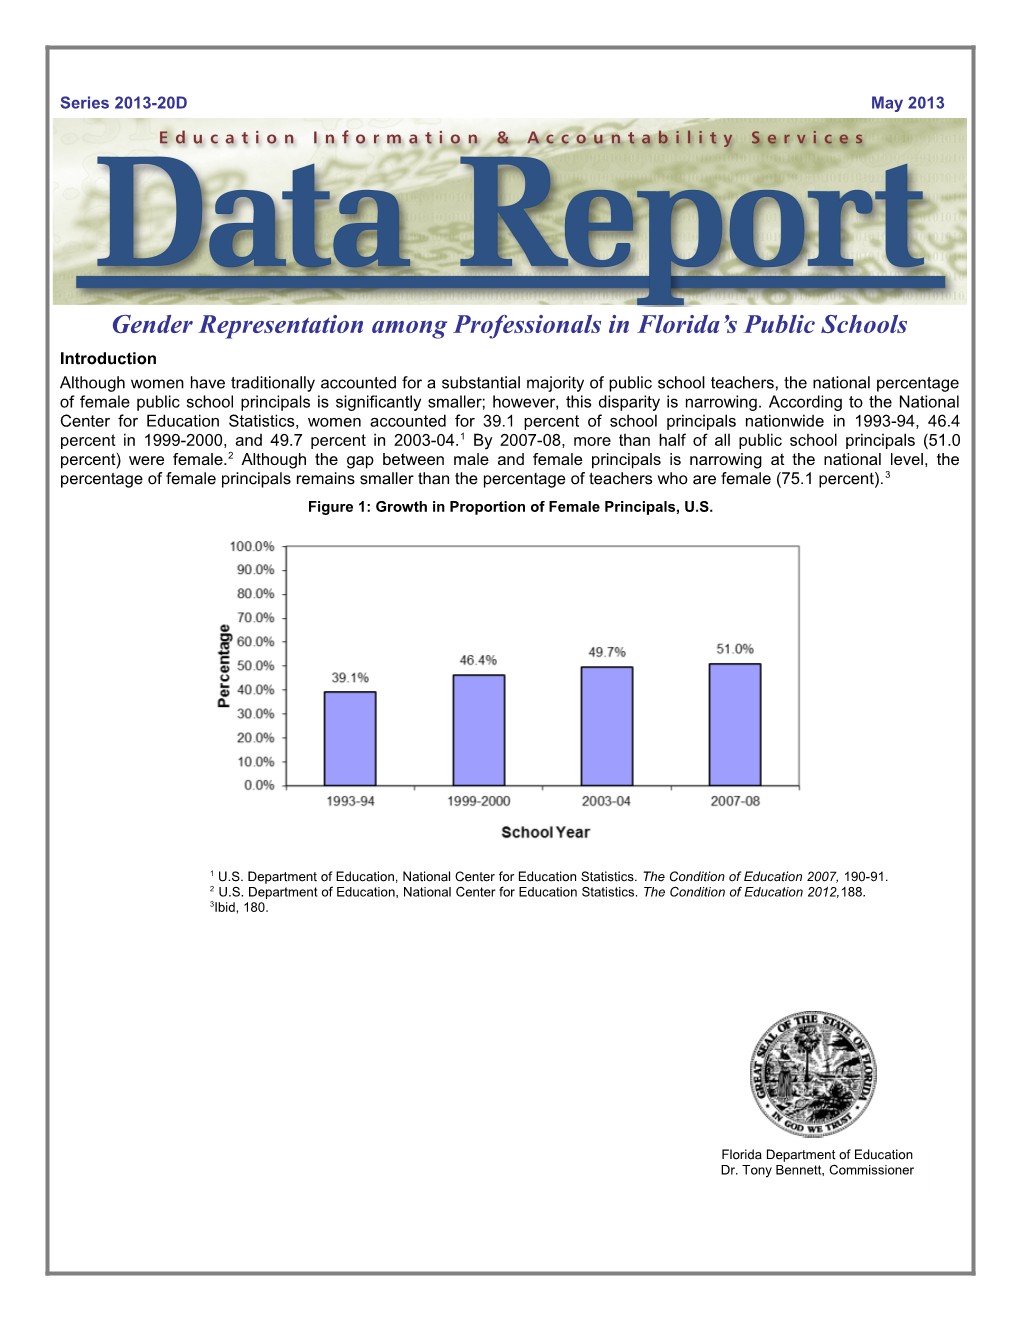 Gender Representation Among Professionals in Florida's Public Schools